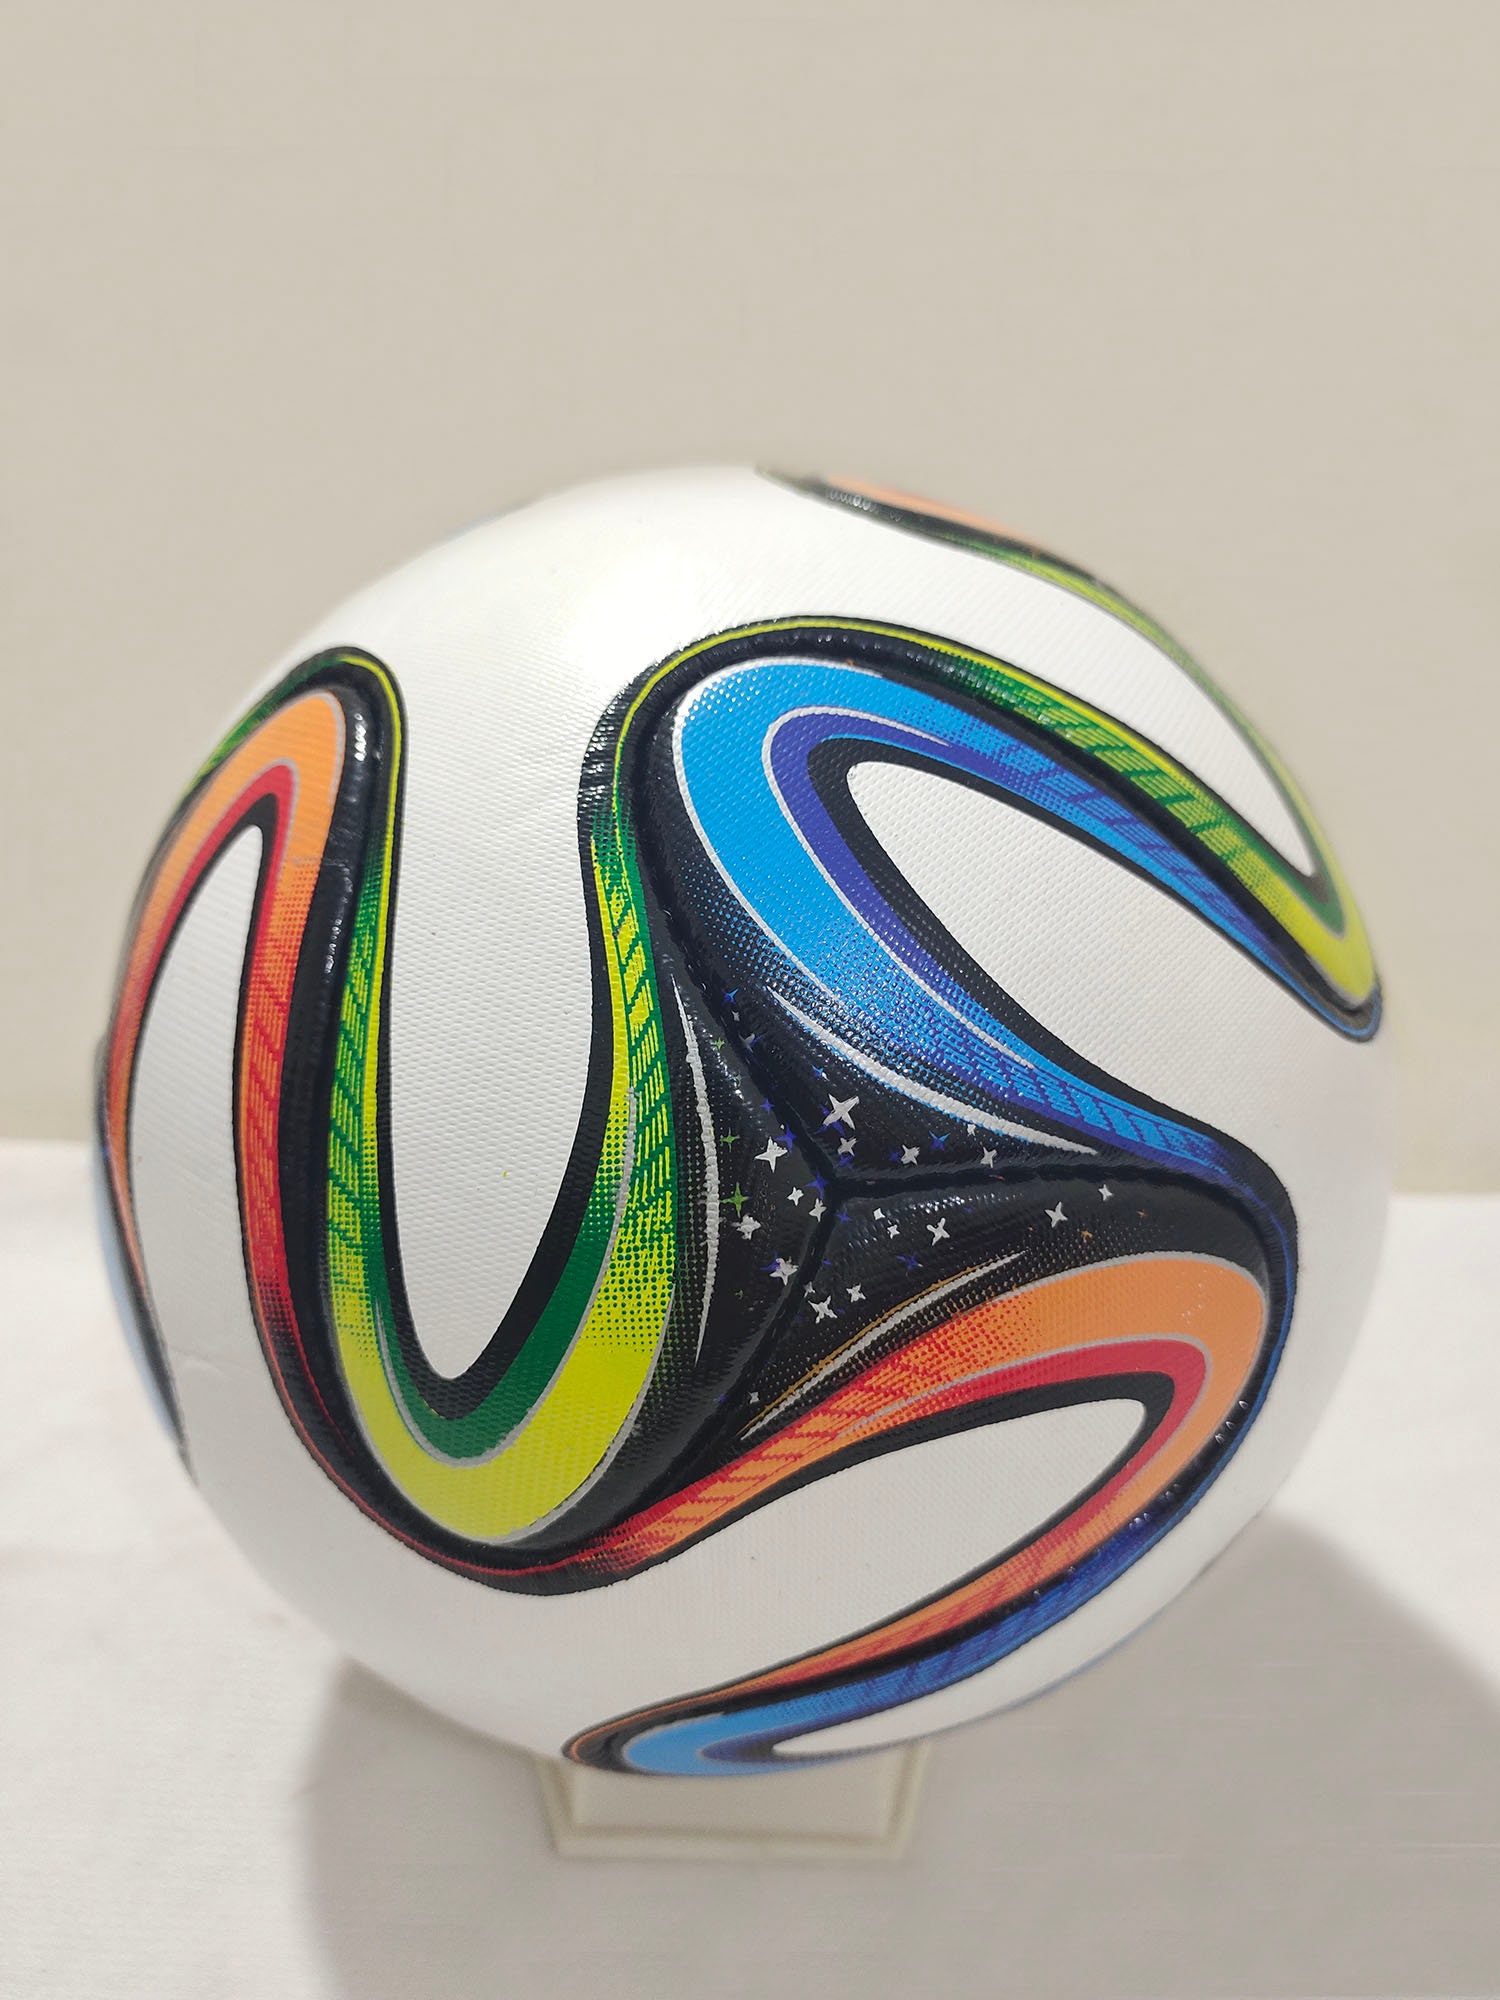 Brazuca Football Official World Cup Brazil 2014 Soccer - Etsy Israel